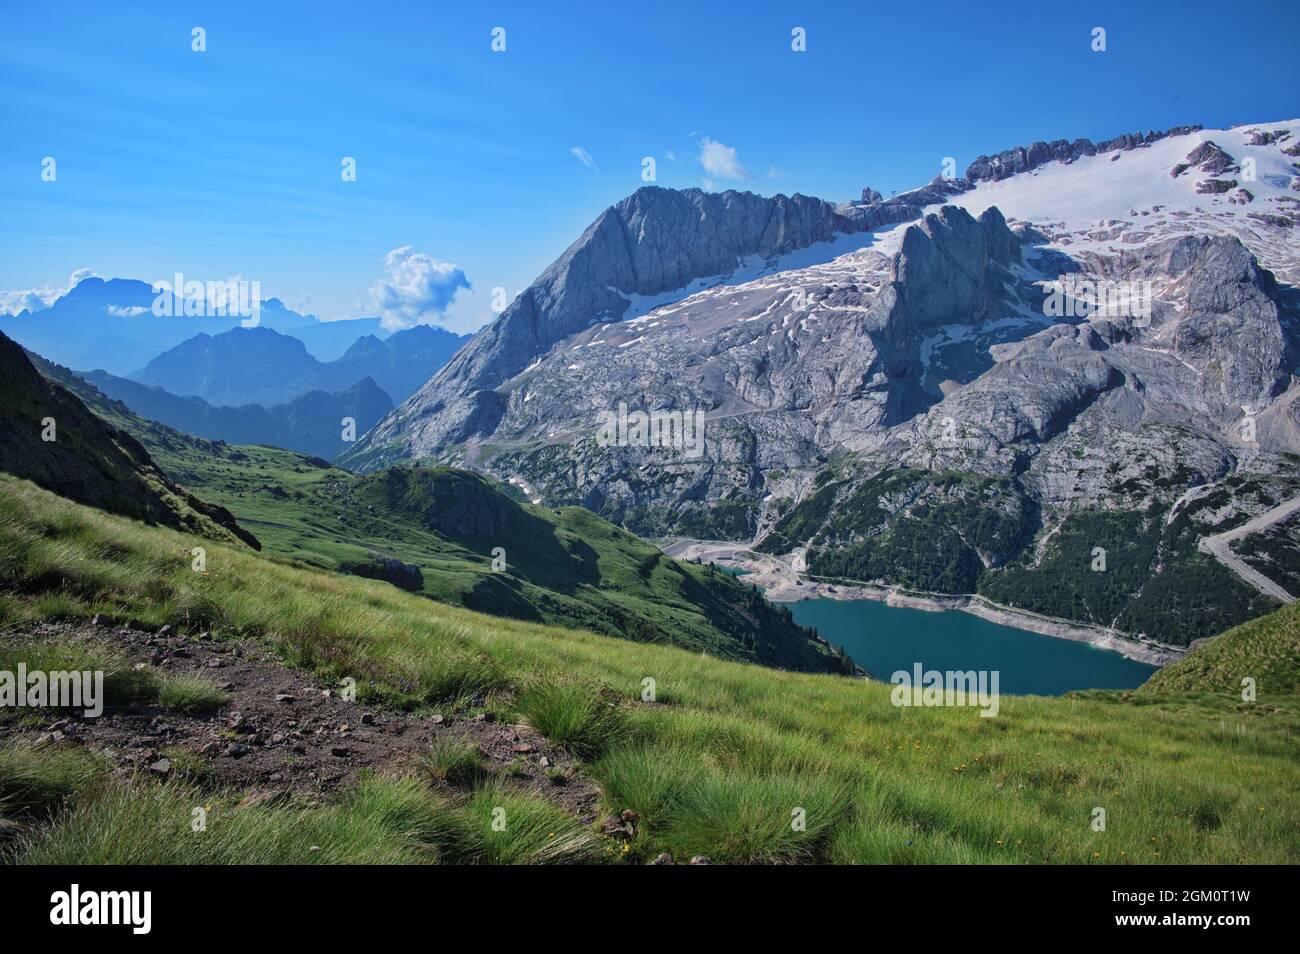 Amazing rocks of Dolomite mountains in Italy Stock Photo